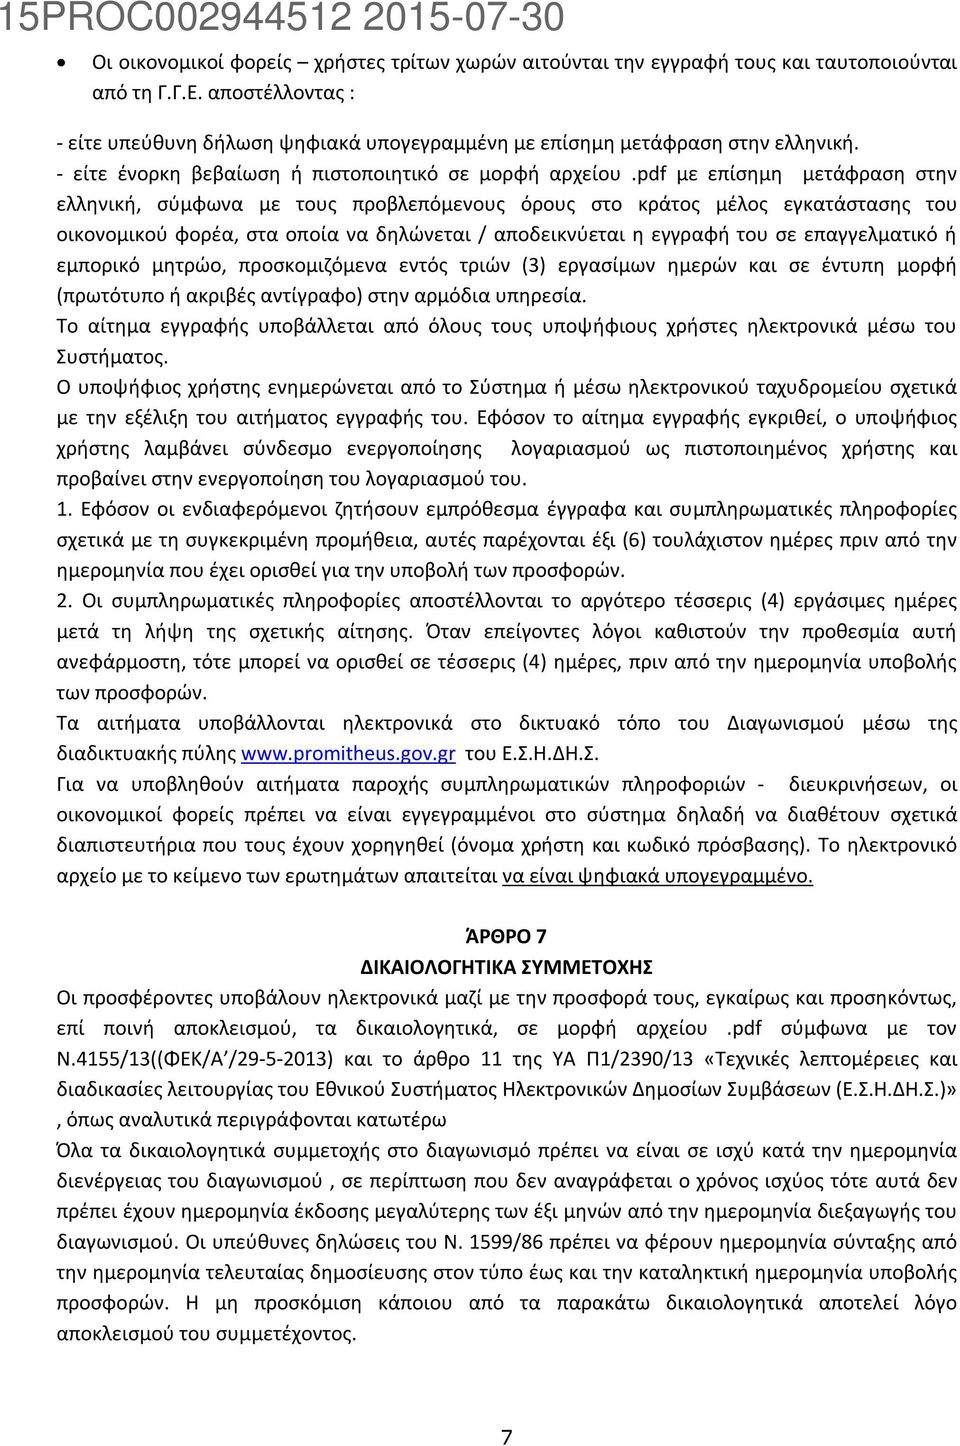 pdf με επίσημη μετάφραση στην ελληνική, σύμφωνα με τους προβλεπόμενους όρους στο κράτος μέλος εγκατάστασης του οικονομικού φορέα, στα οποία να δηλώνεται / αποδεικνύεται η εγγραφή του σε επαγγελματικό